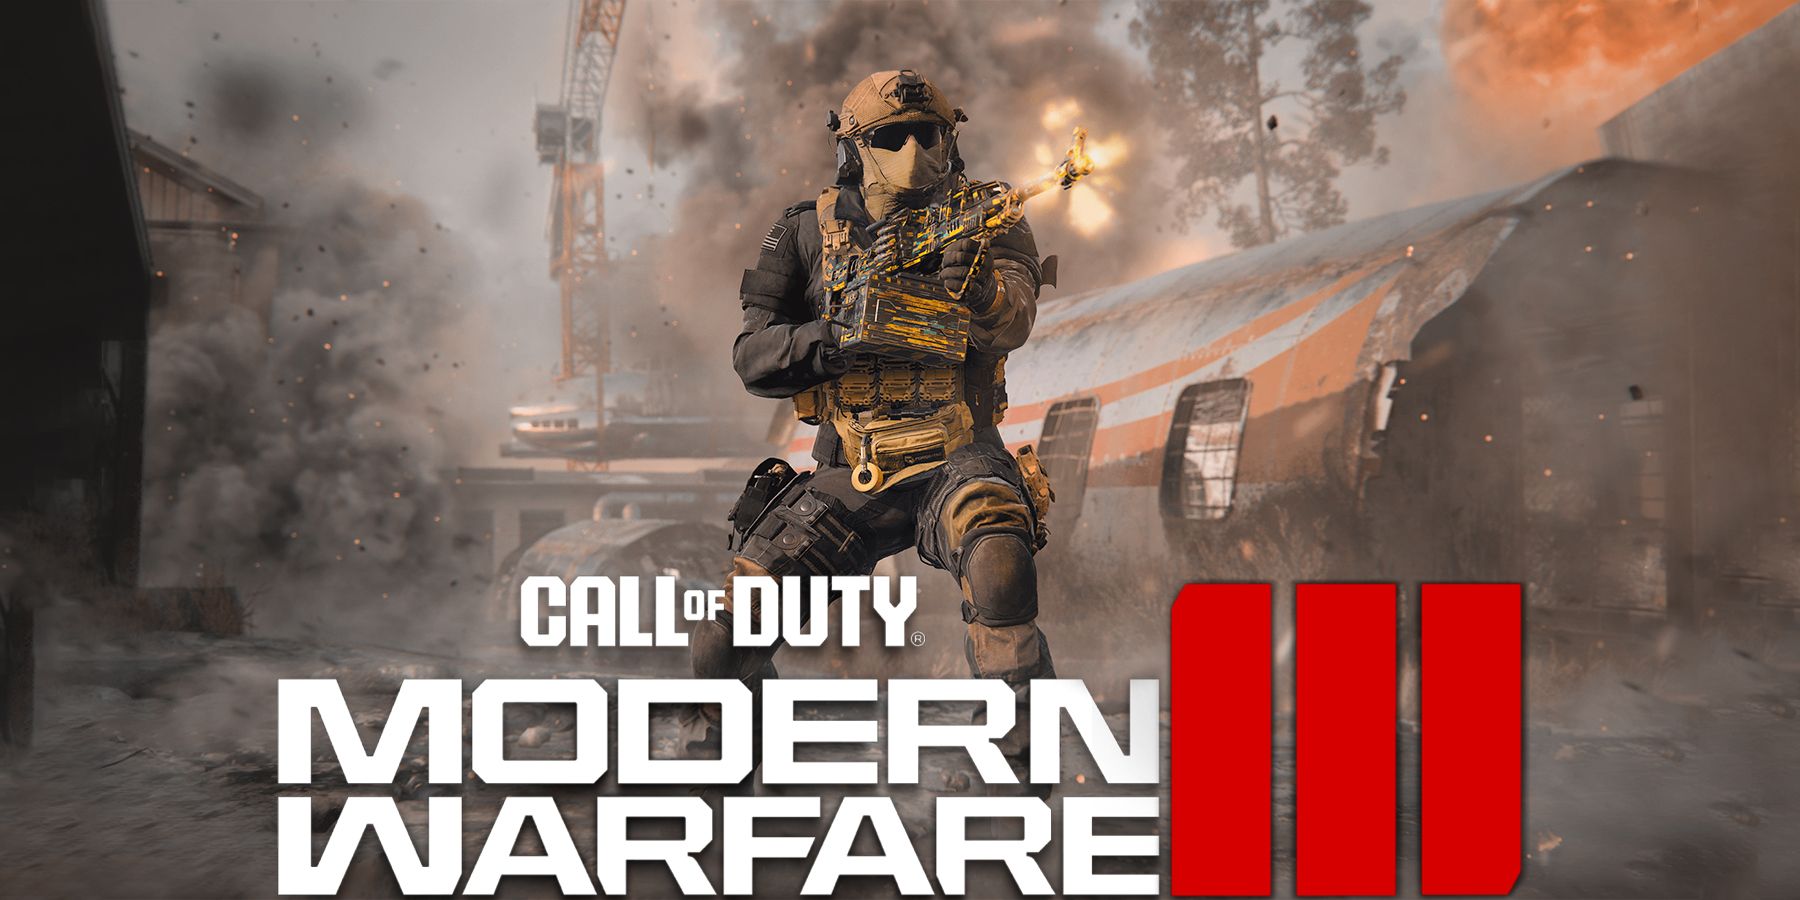 Call Of Duty: Modern Warfare III Was November's Best-Selling Game